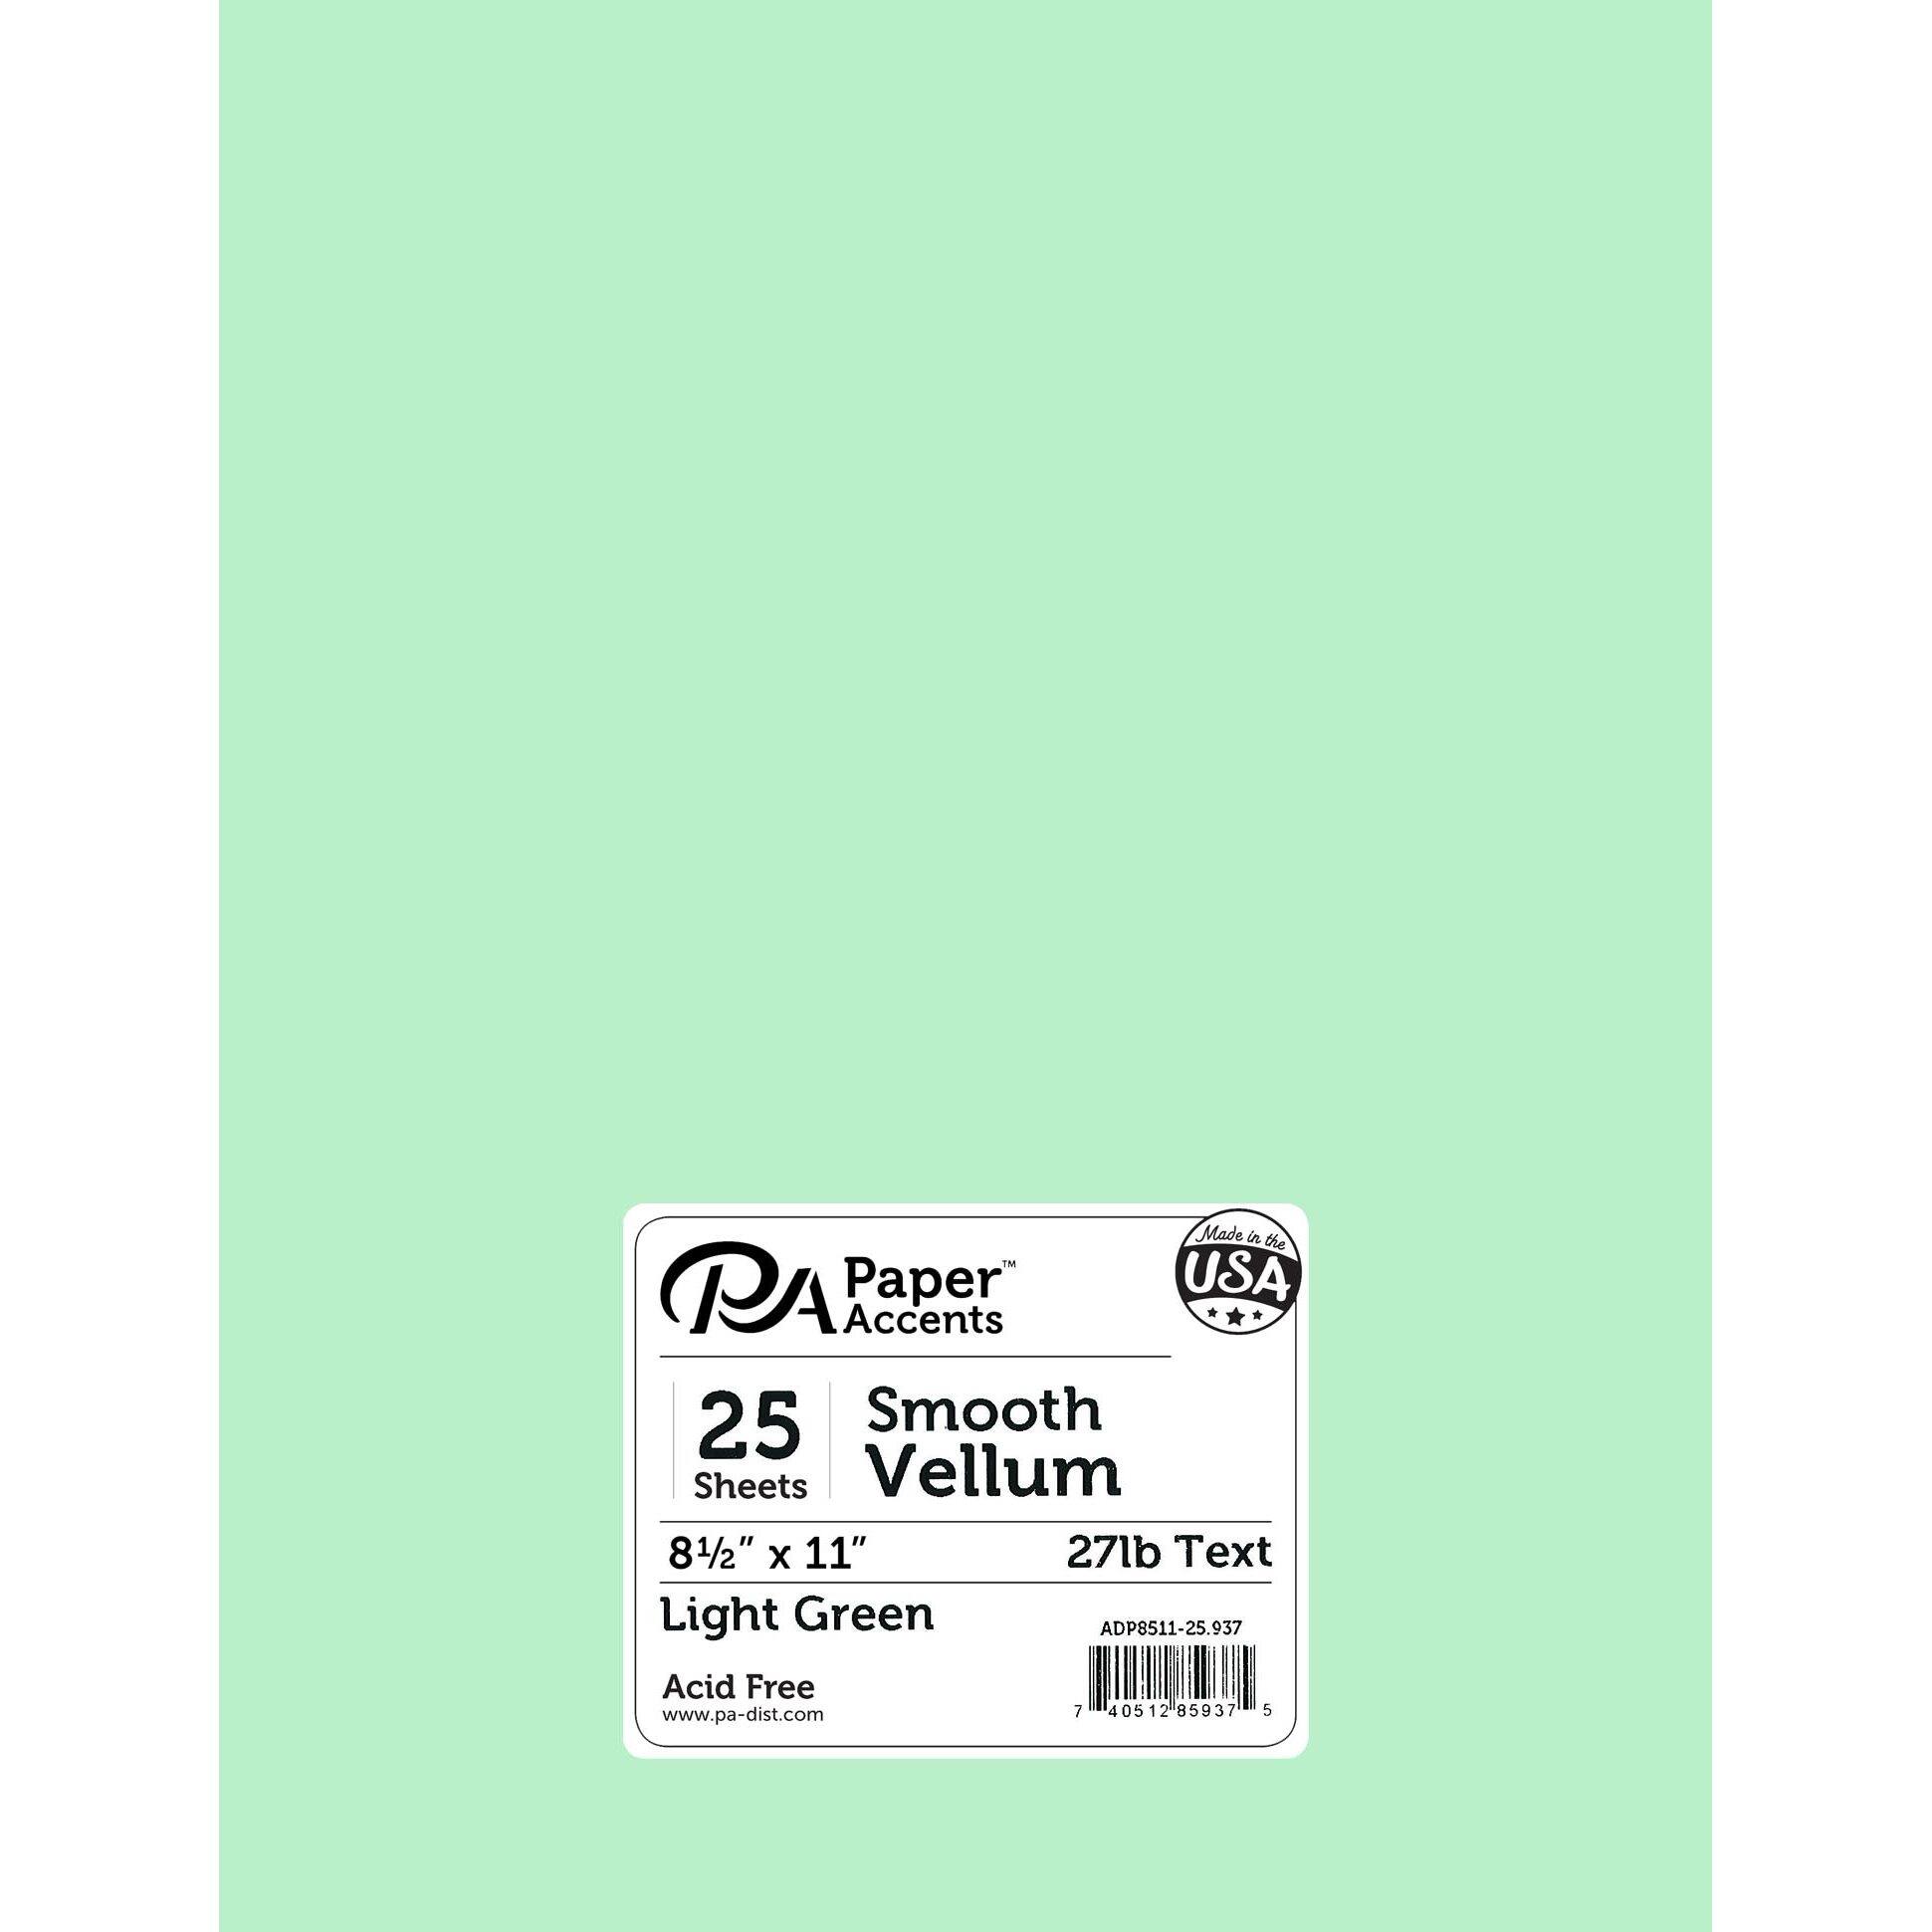 8.5-x-11-inch Accent Design Paper Accents Vellum Cotton Candy 